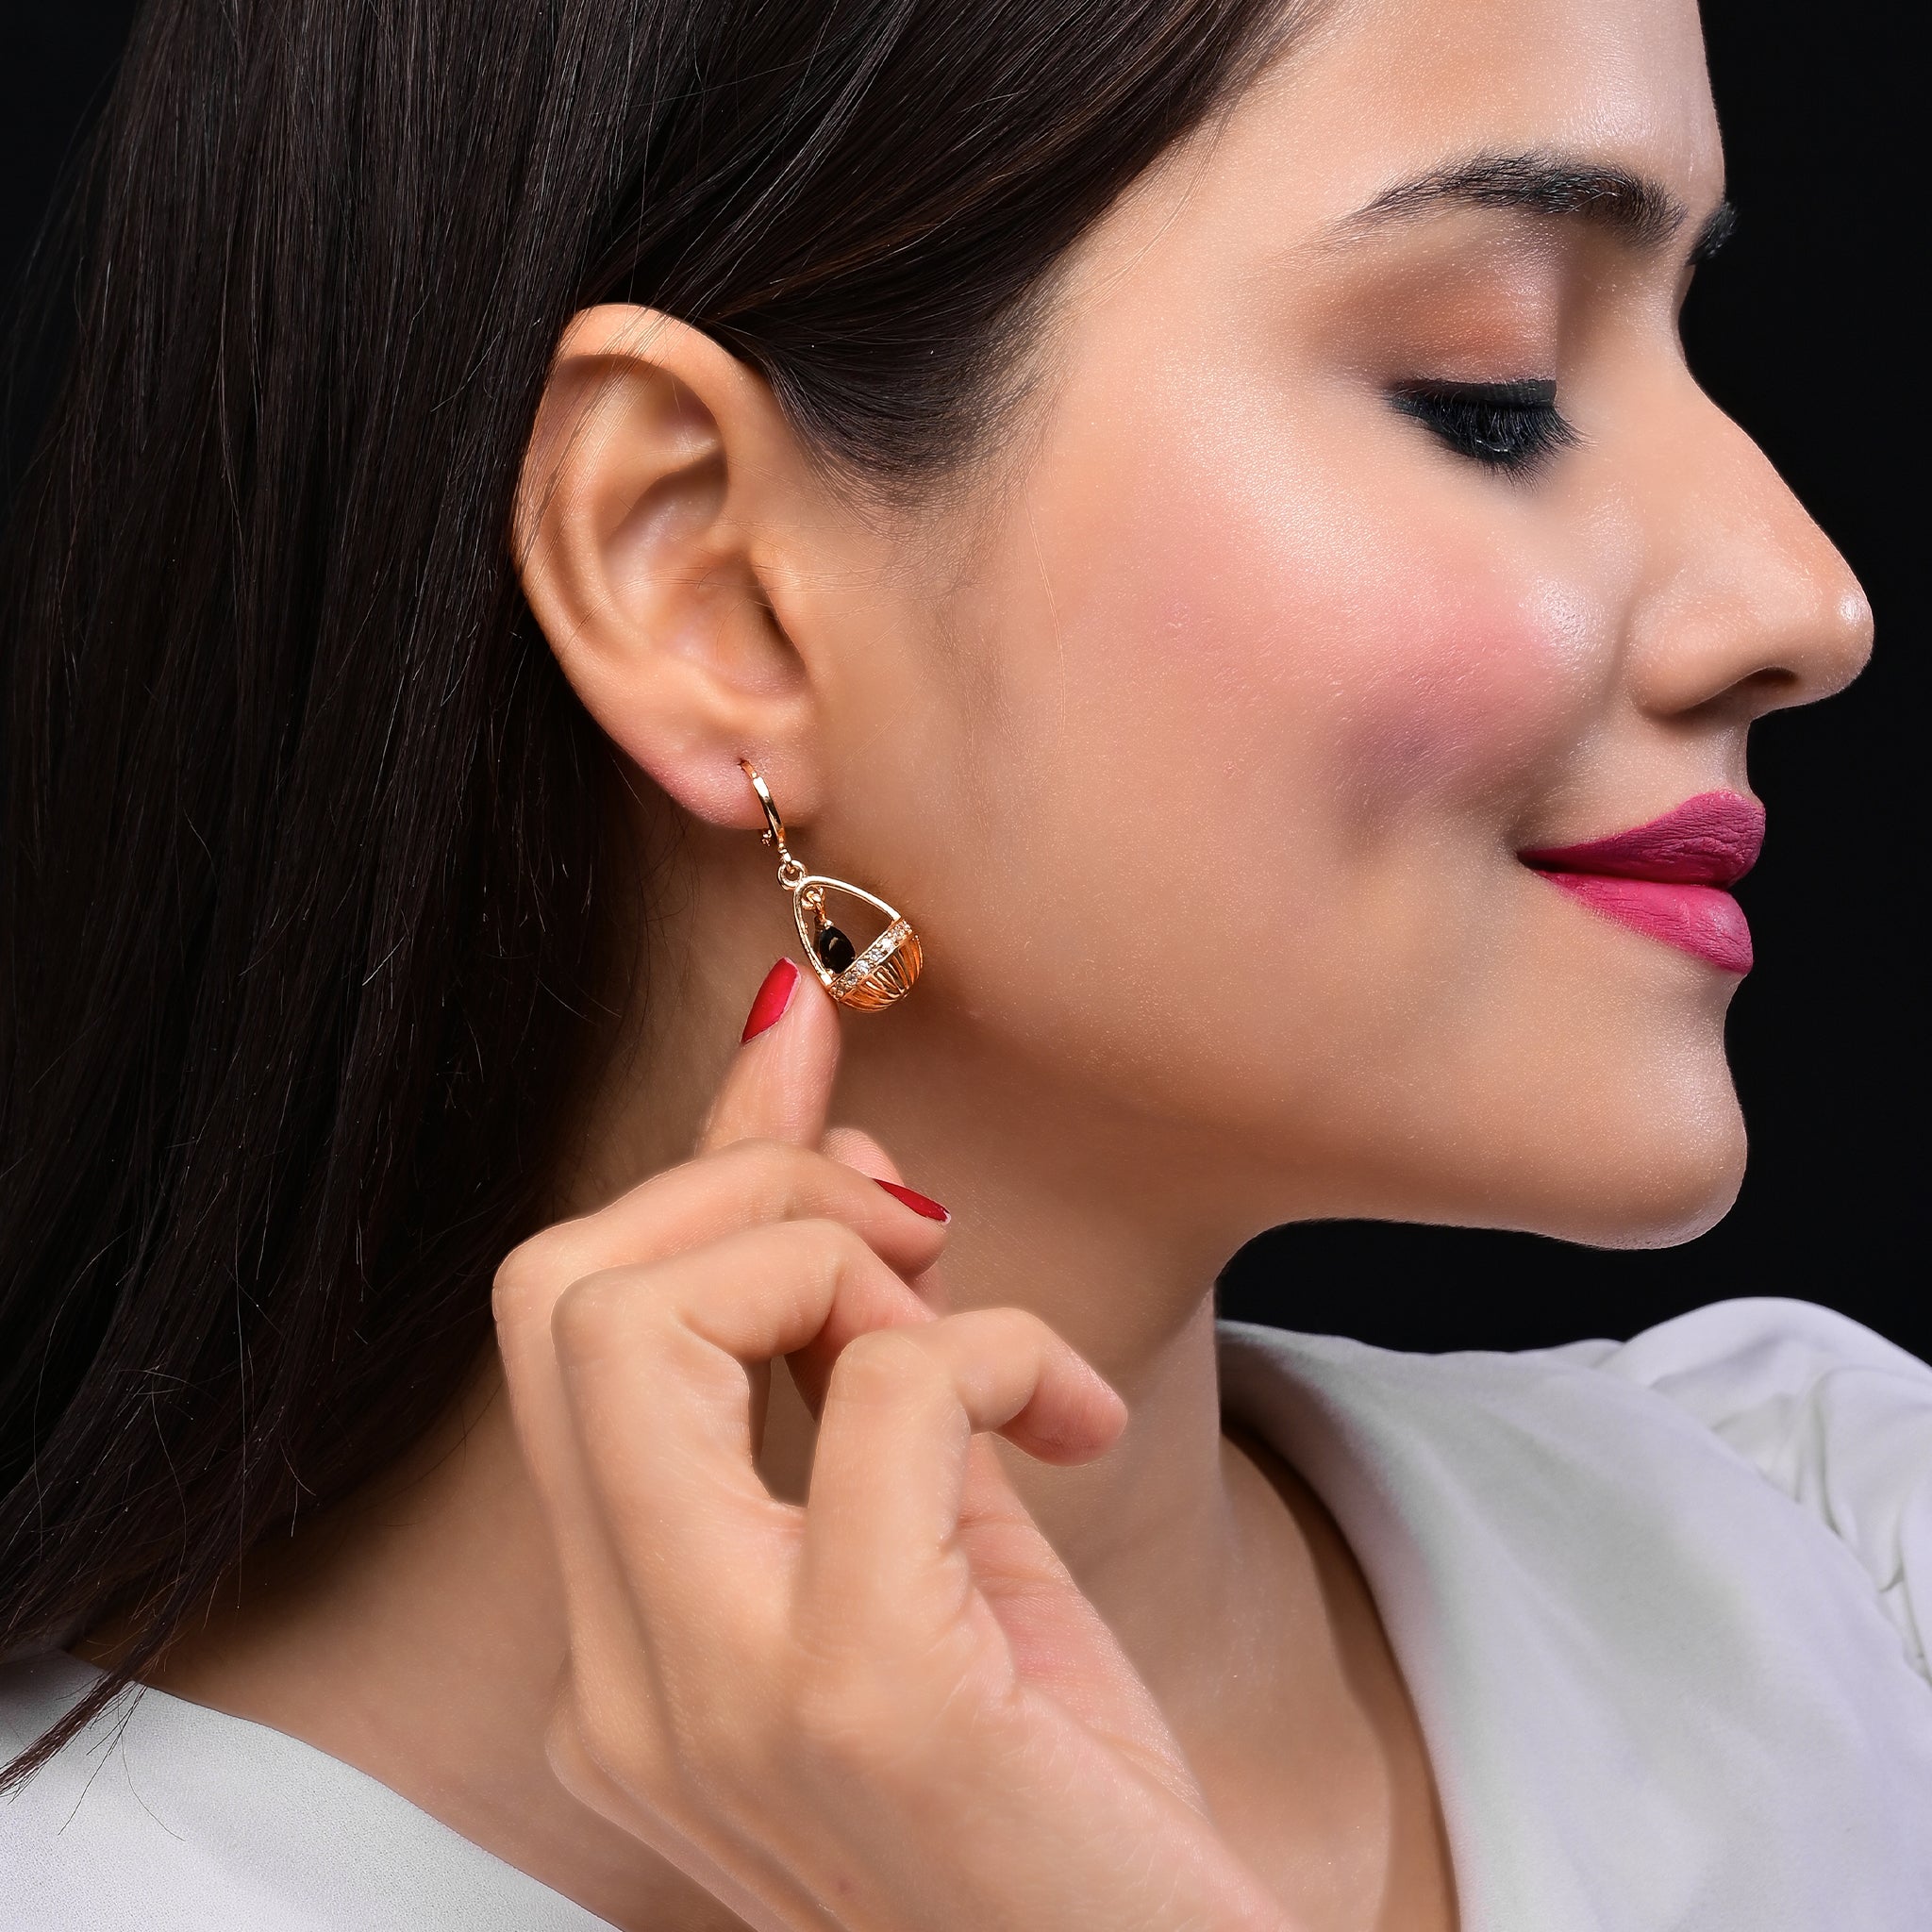 Rook Piercing Vs Daith|stainless Steel Cubic Zirconia Tragus Stud Earrings  - Screw-back Cartilage Piercing Jewelry